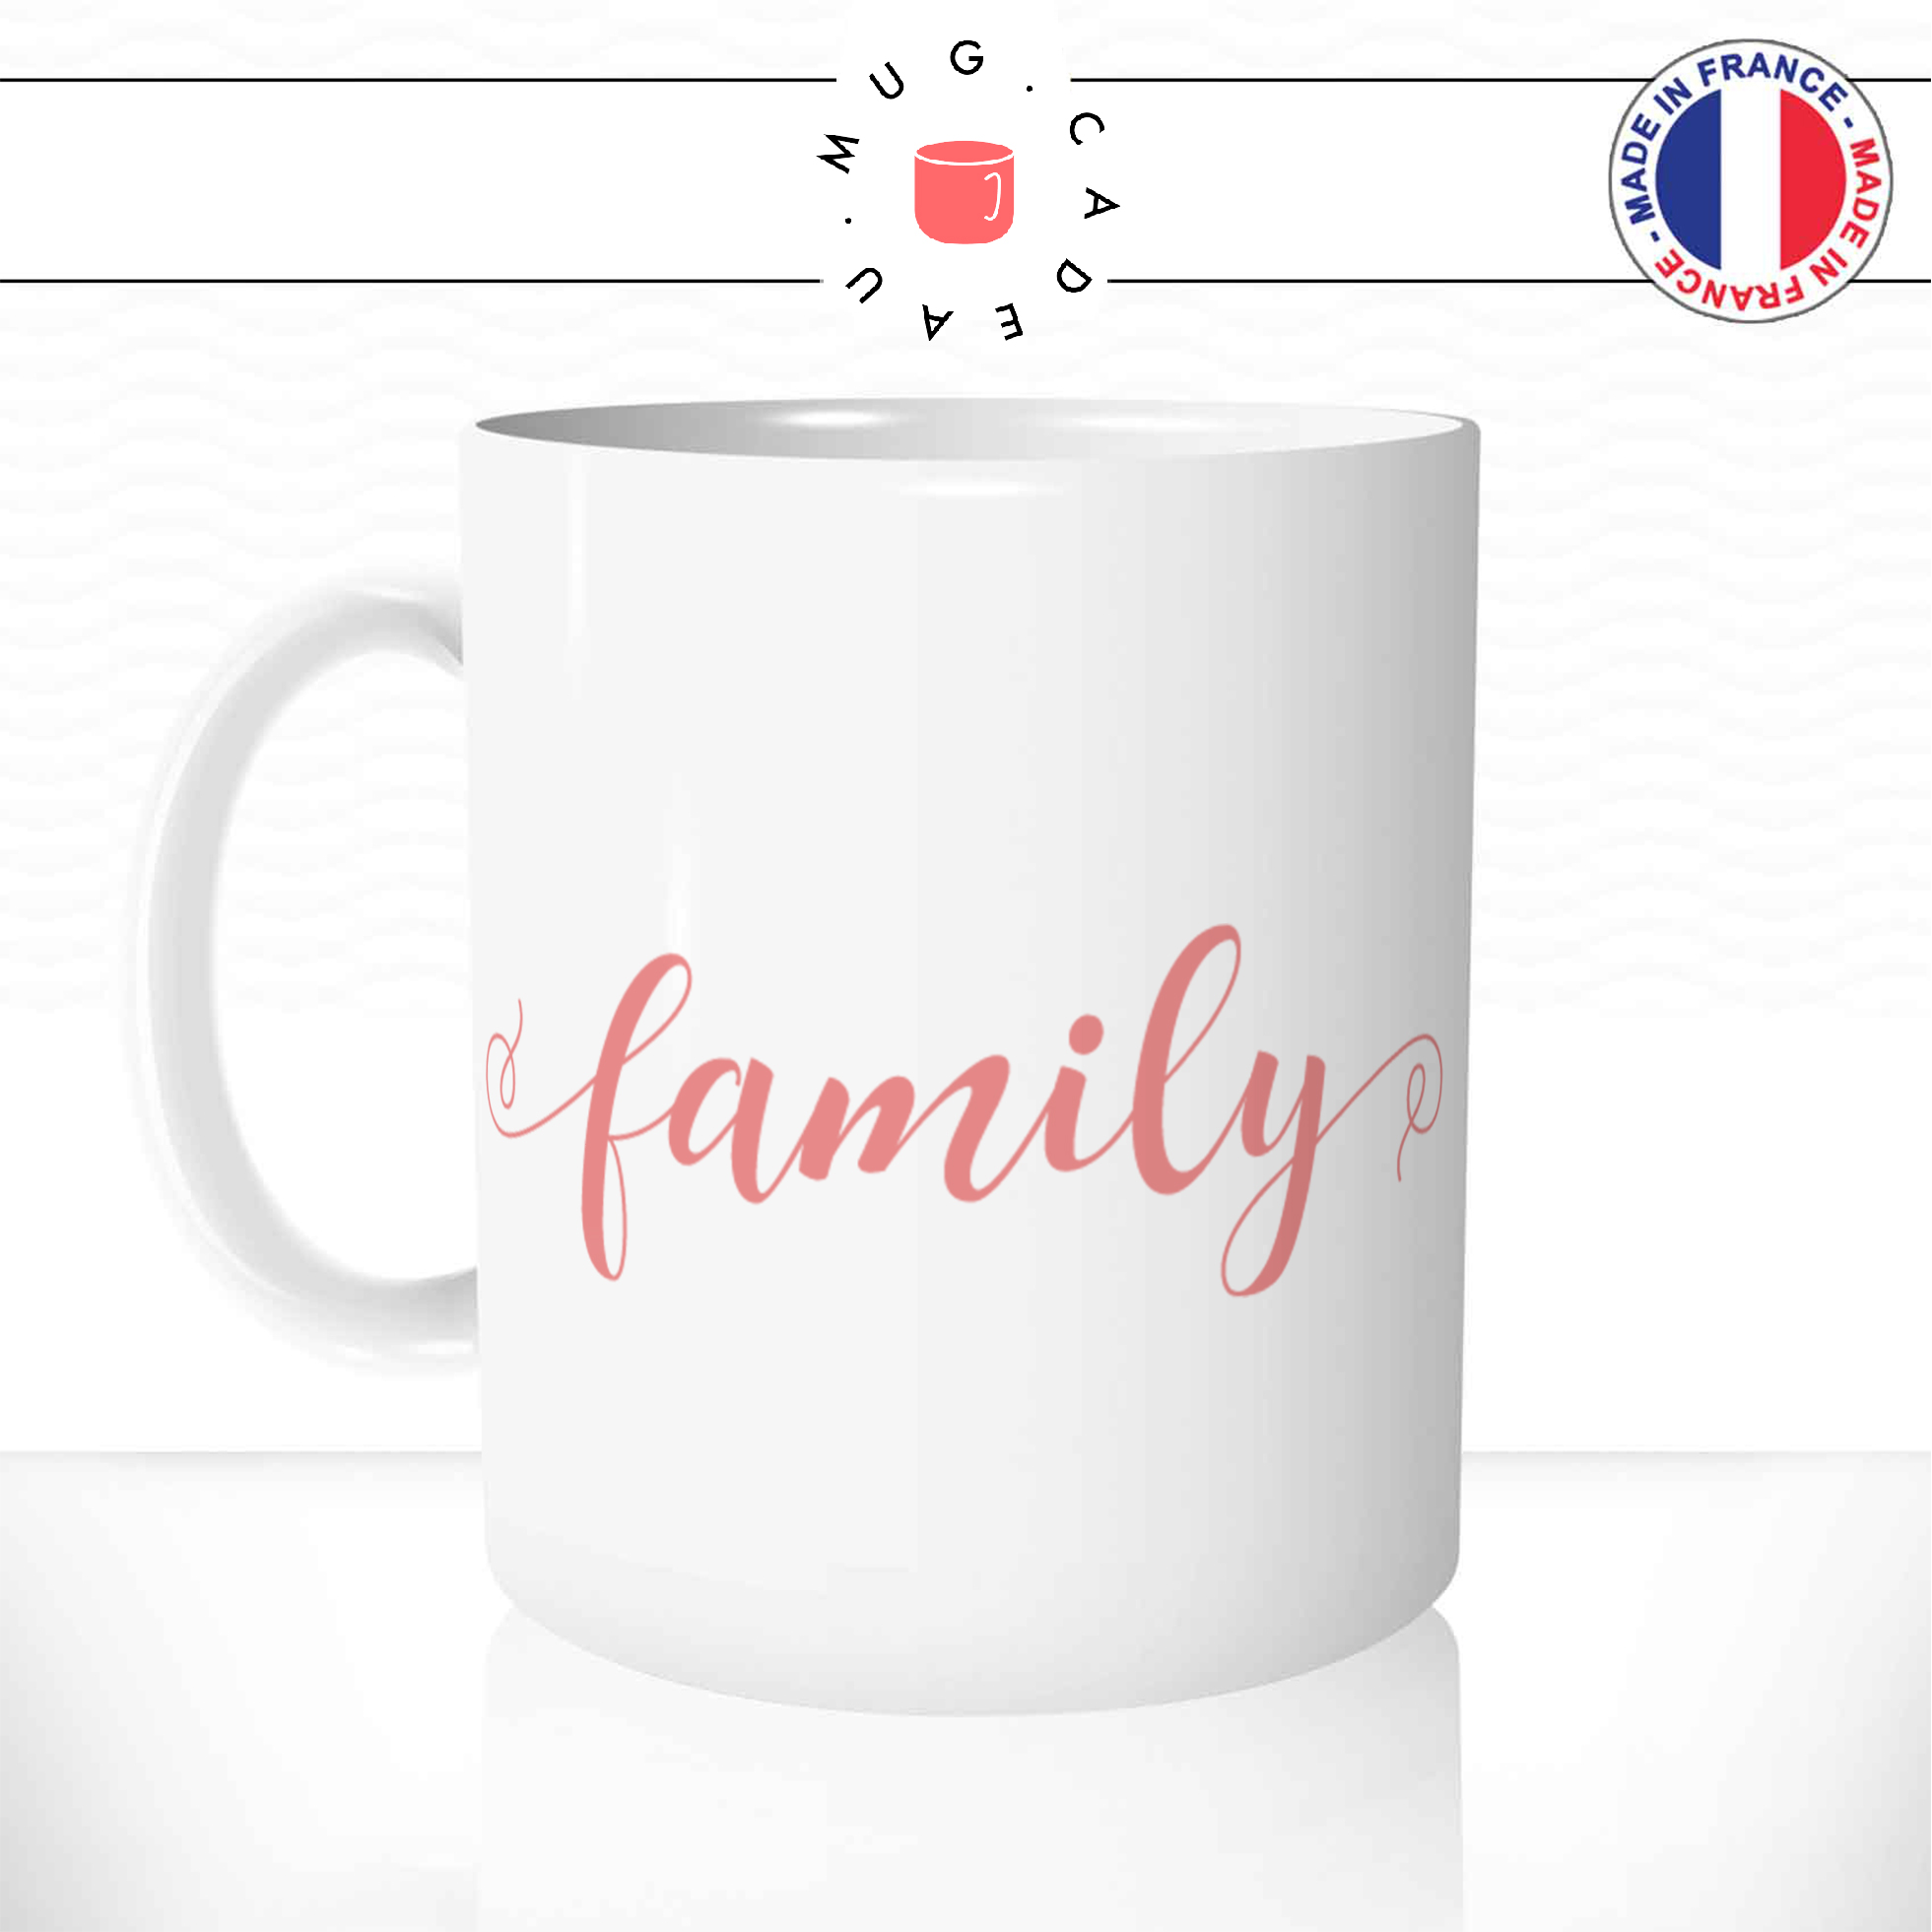 mug-tasse-ref36-citation-heureuse-family-ecriture-rose-cafe-the-mugs-tasses-personnalise-anse-gauche